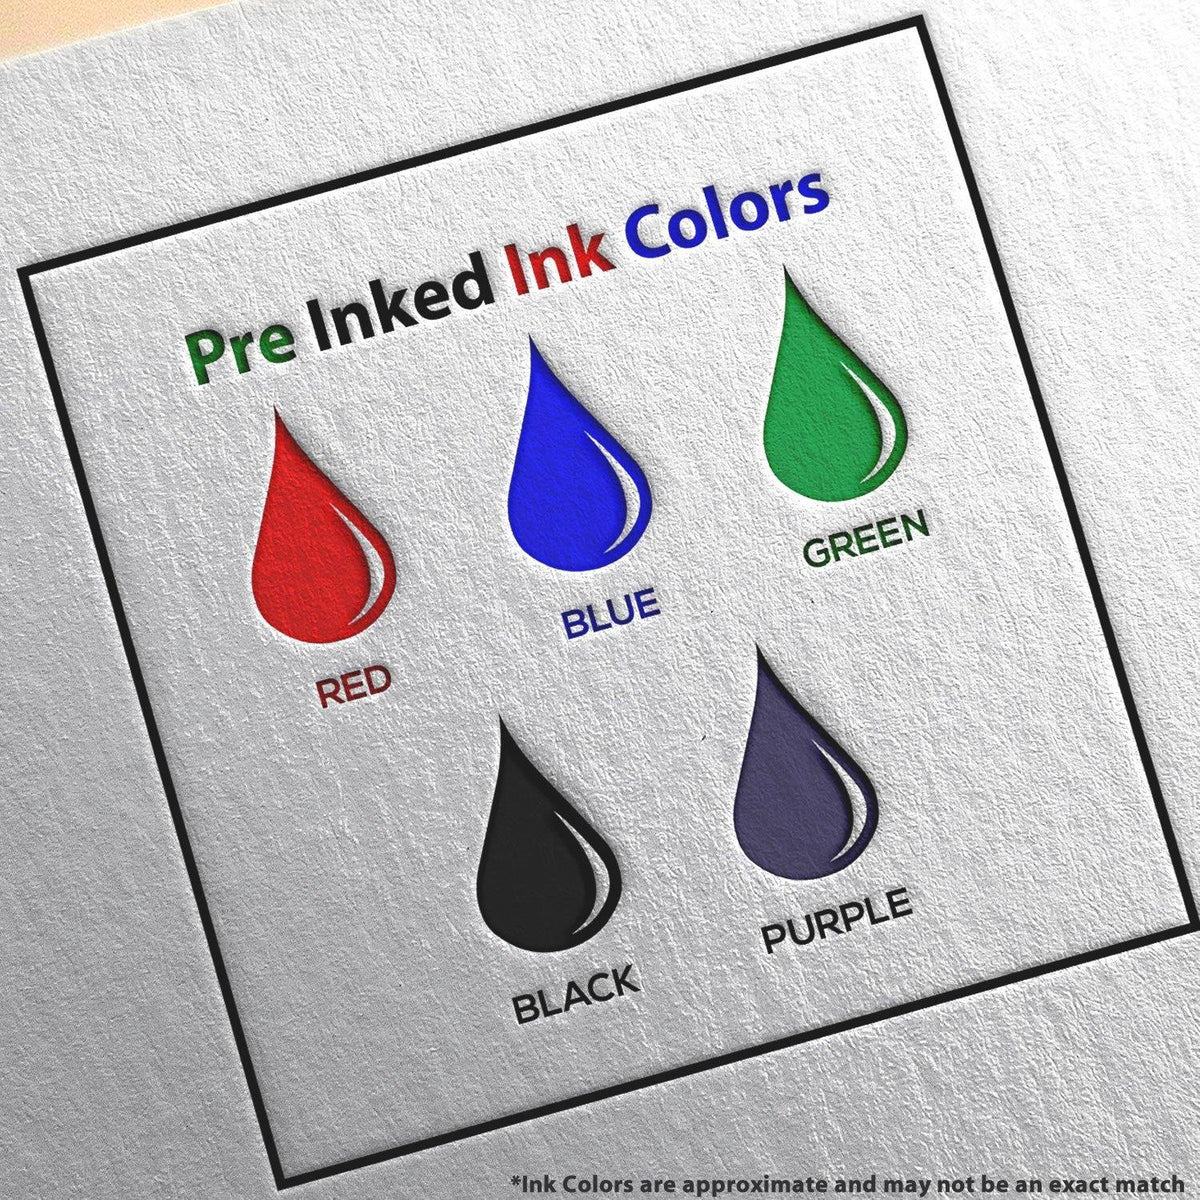 Large Pre Inked For Deposit Only Stamp Ink Color Options